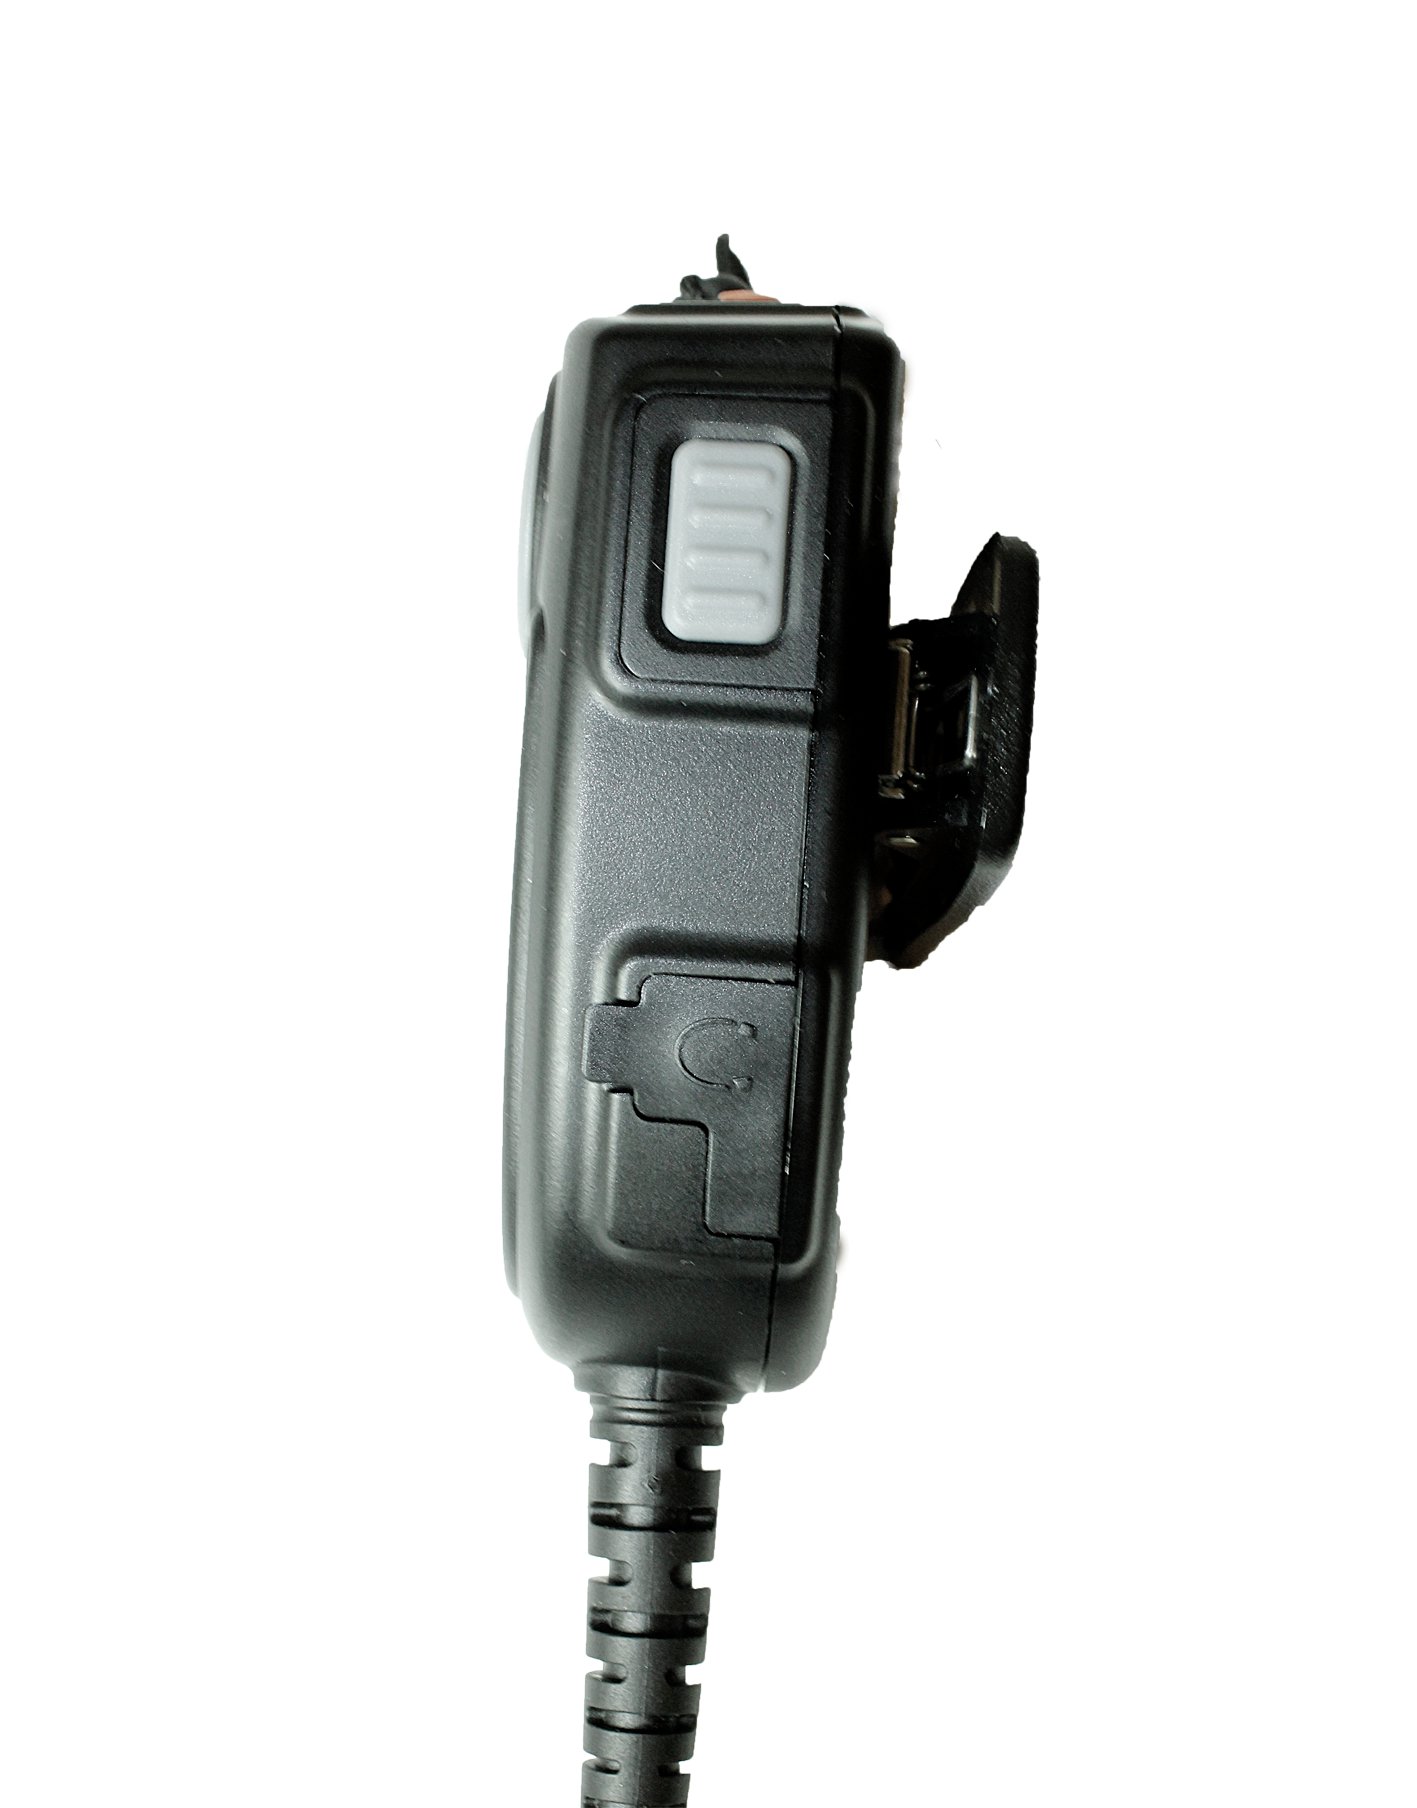 TITAN Lautsprechermikrofon MM20 mit Nexus 01 passend für Motorola DP2400, DP2600